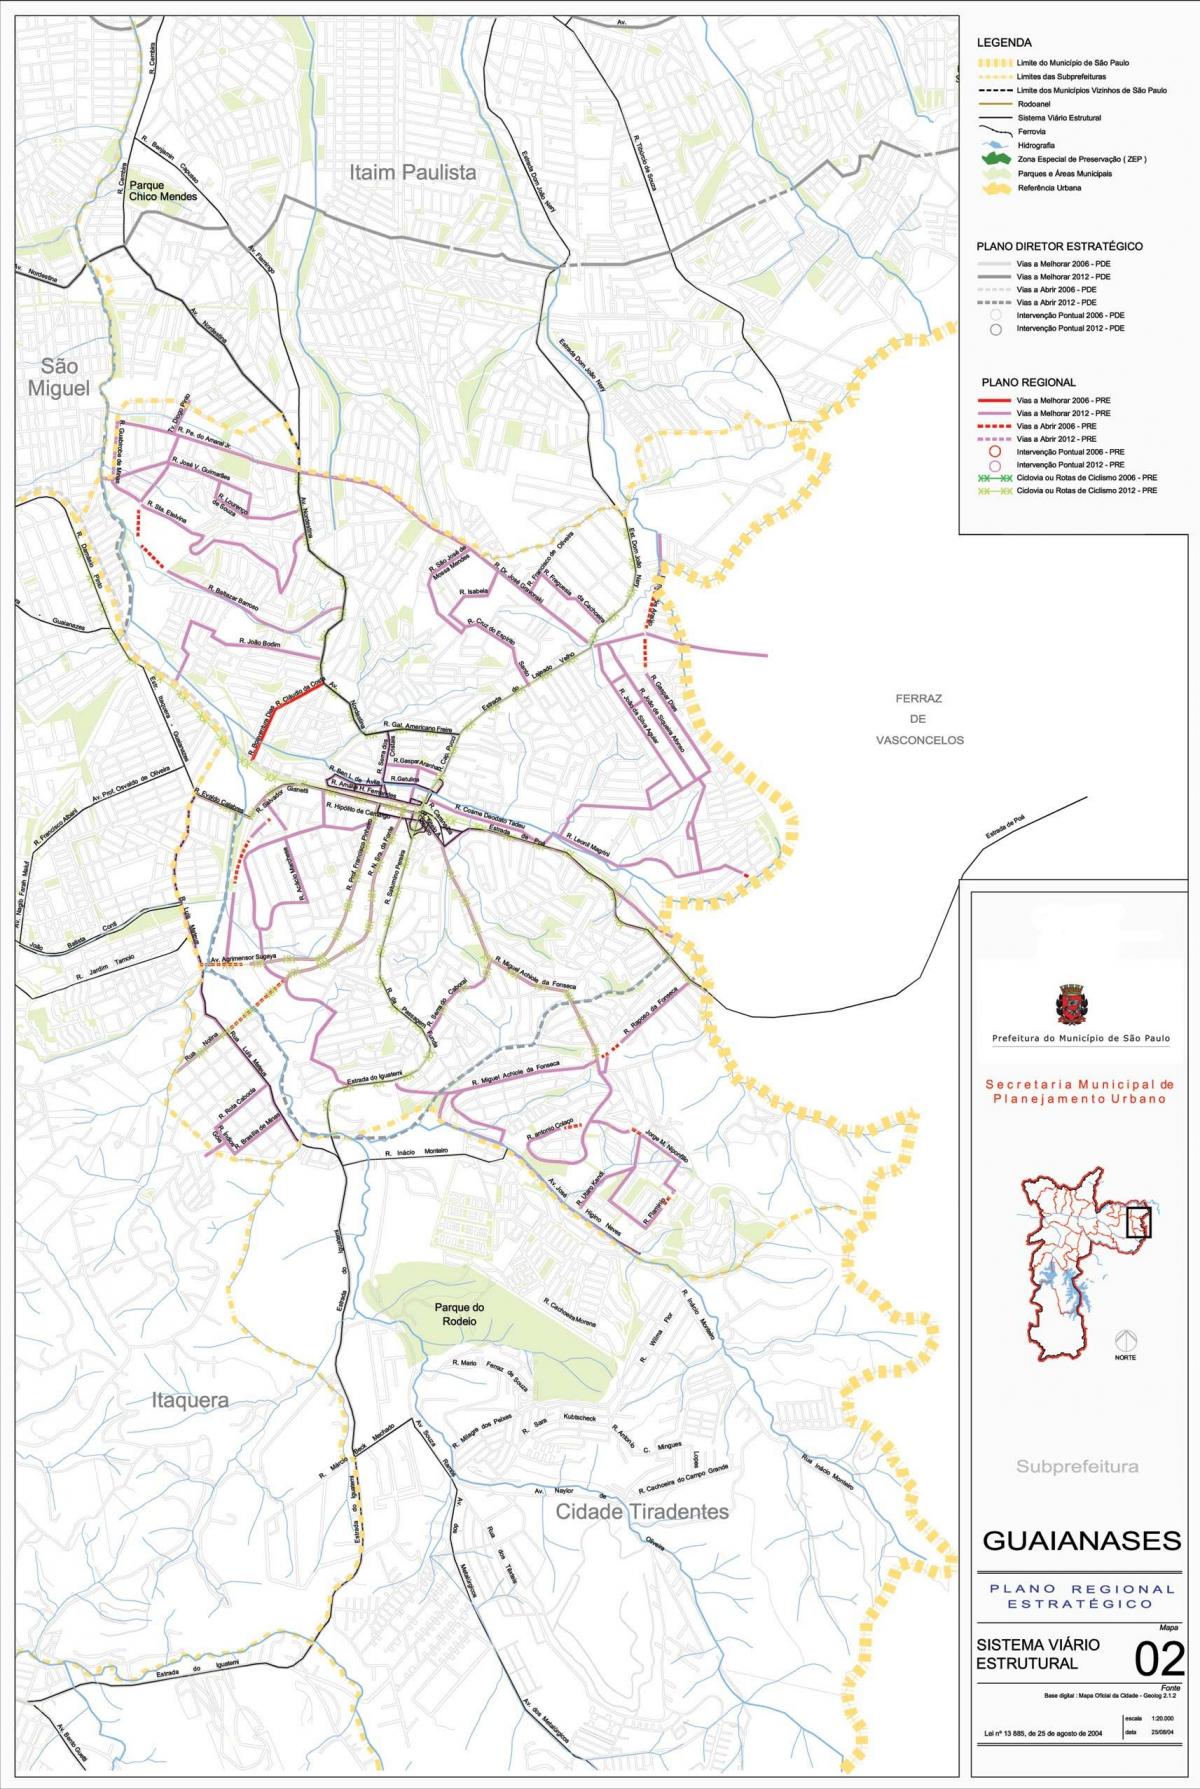 Mapa de Guaianases São Paulo - Carreteres